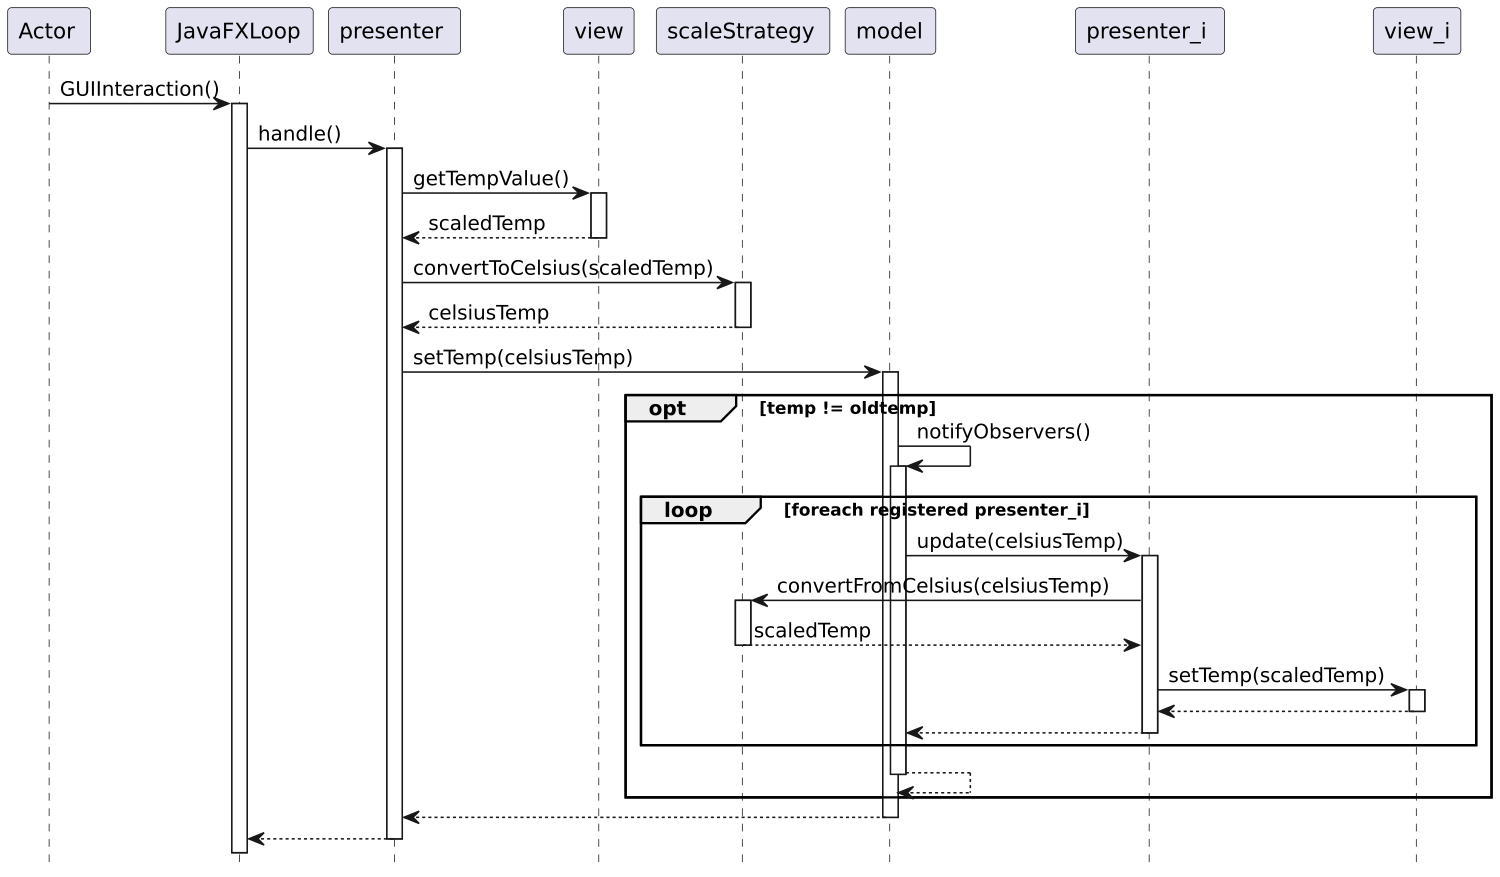 Sequence diagram